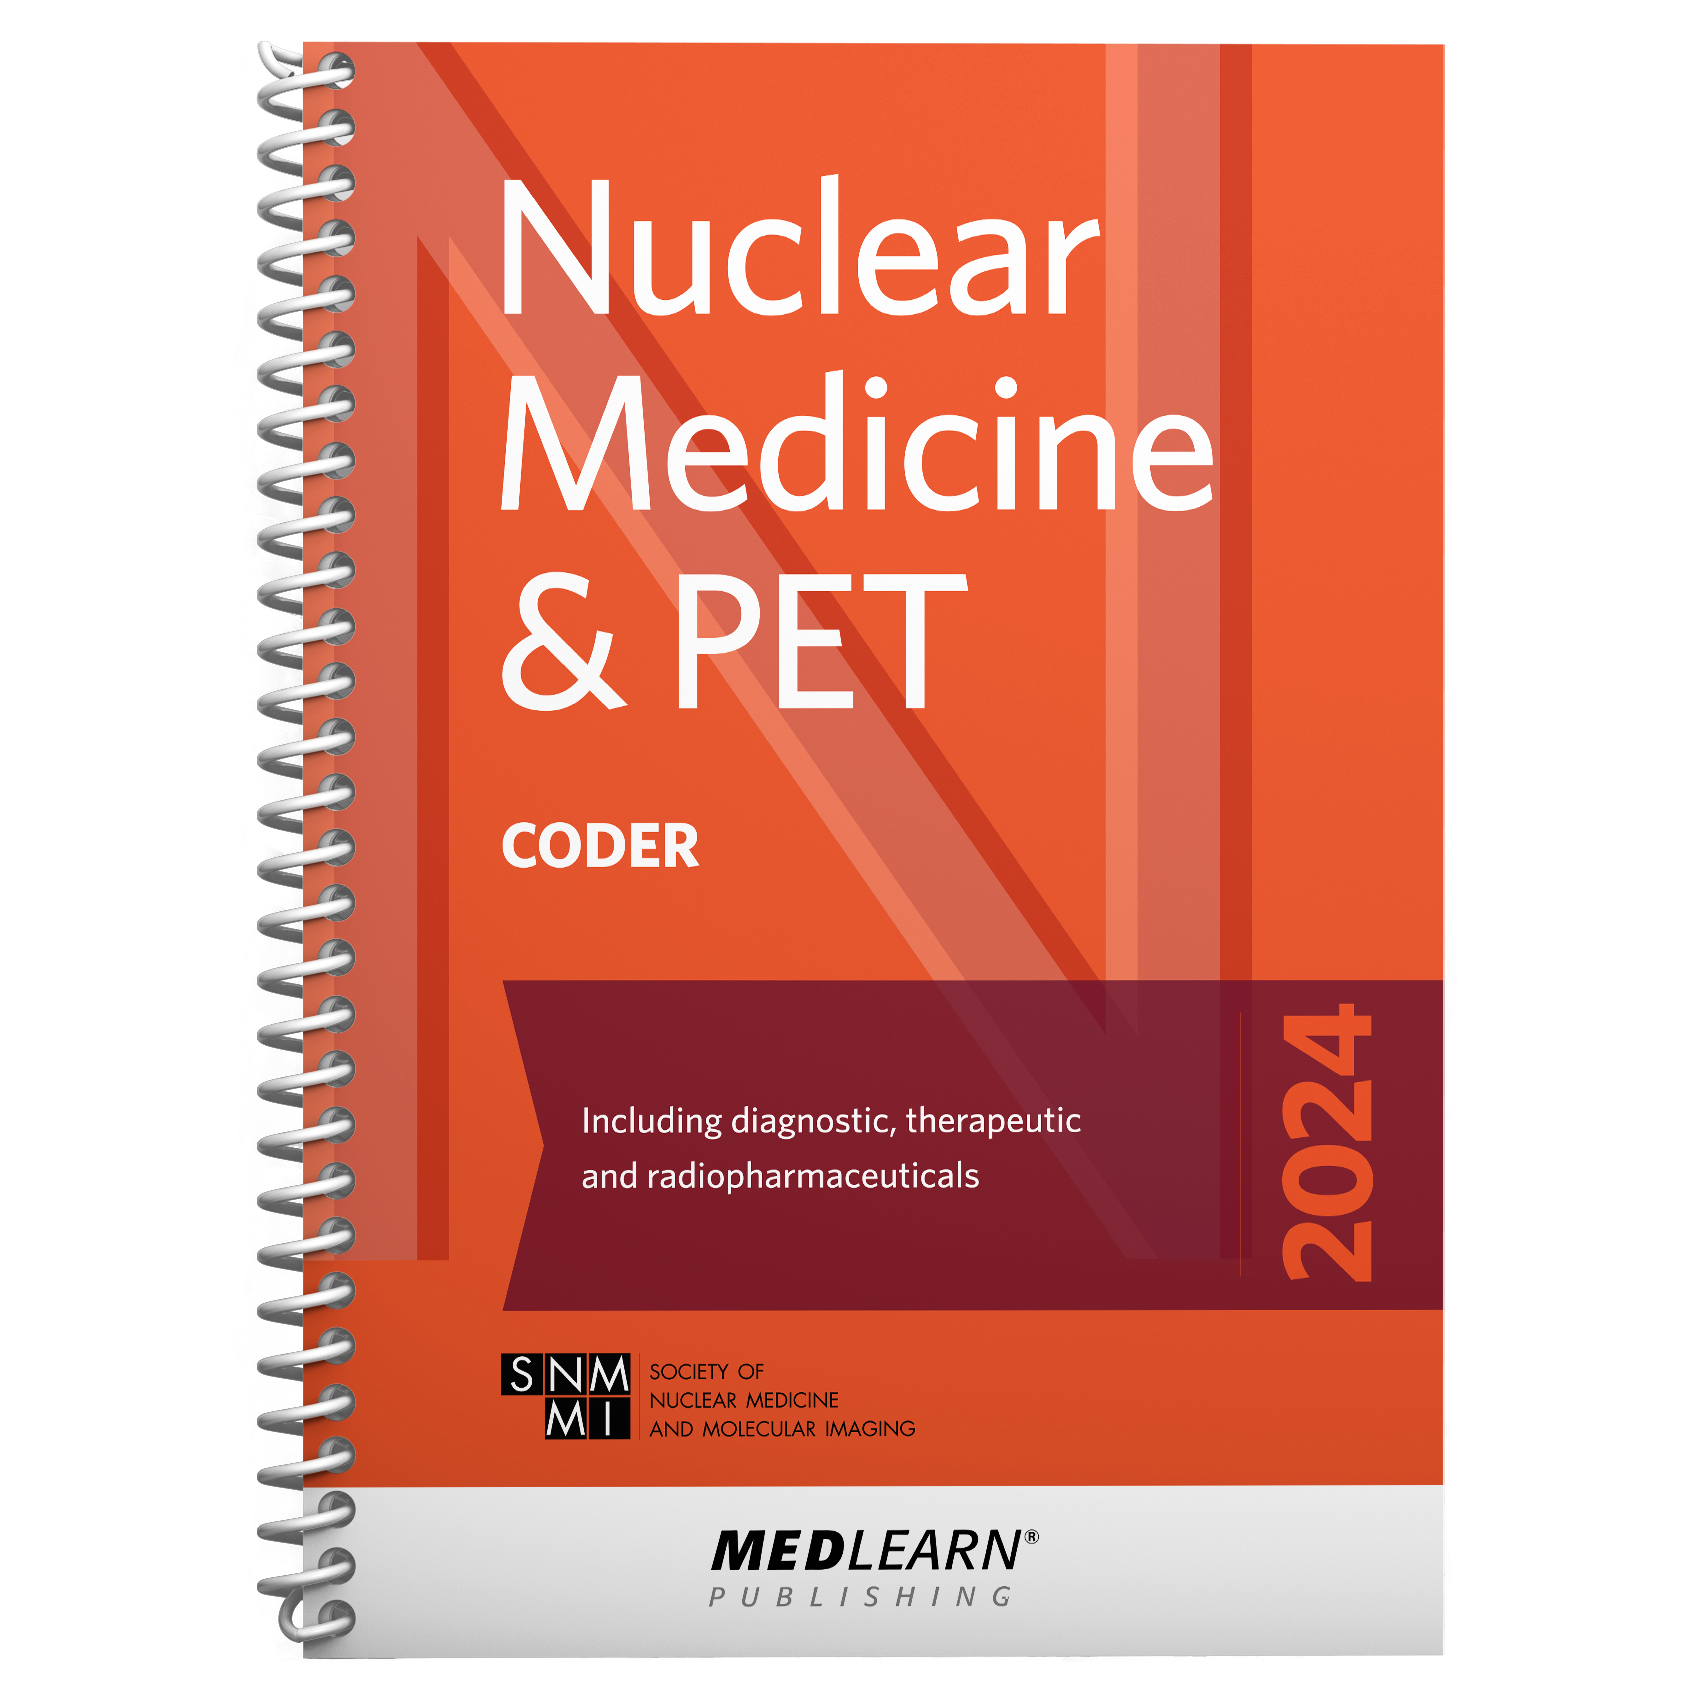 Nuclear Medicine & PET Coder